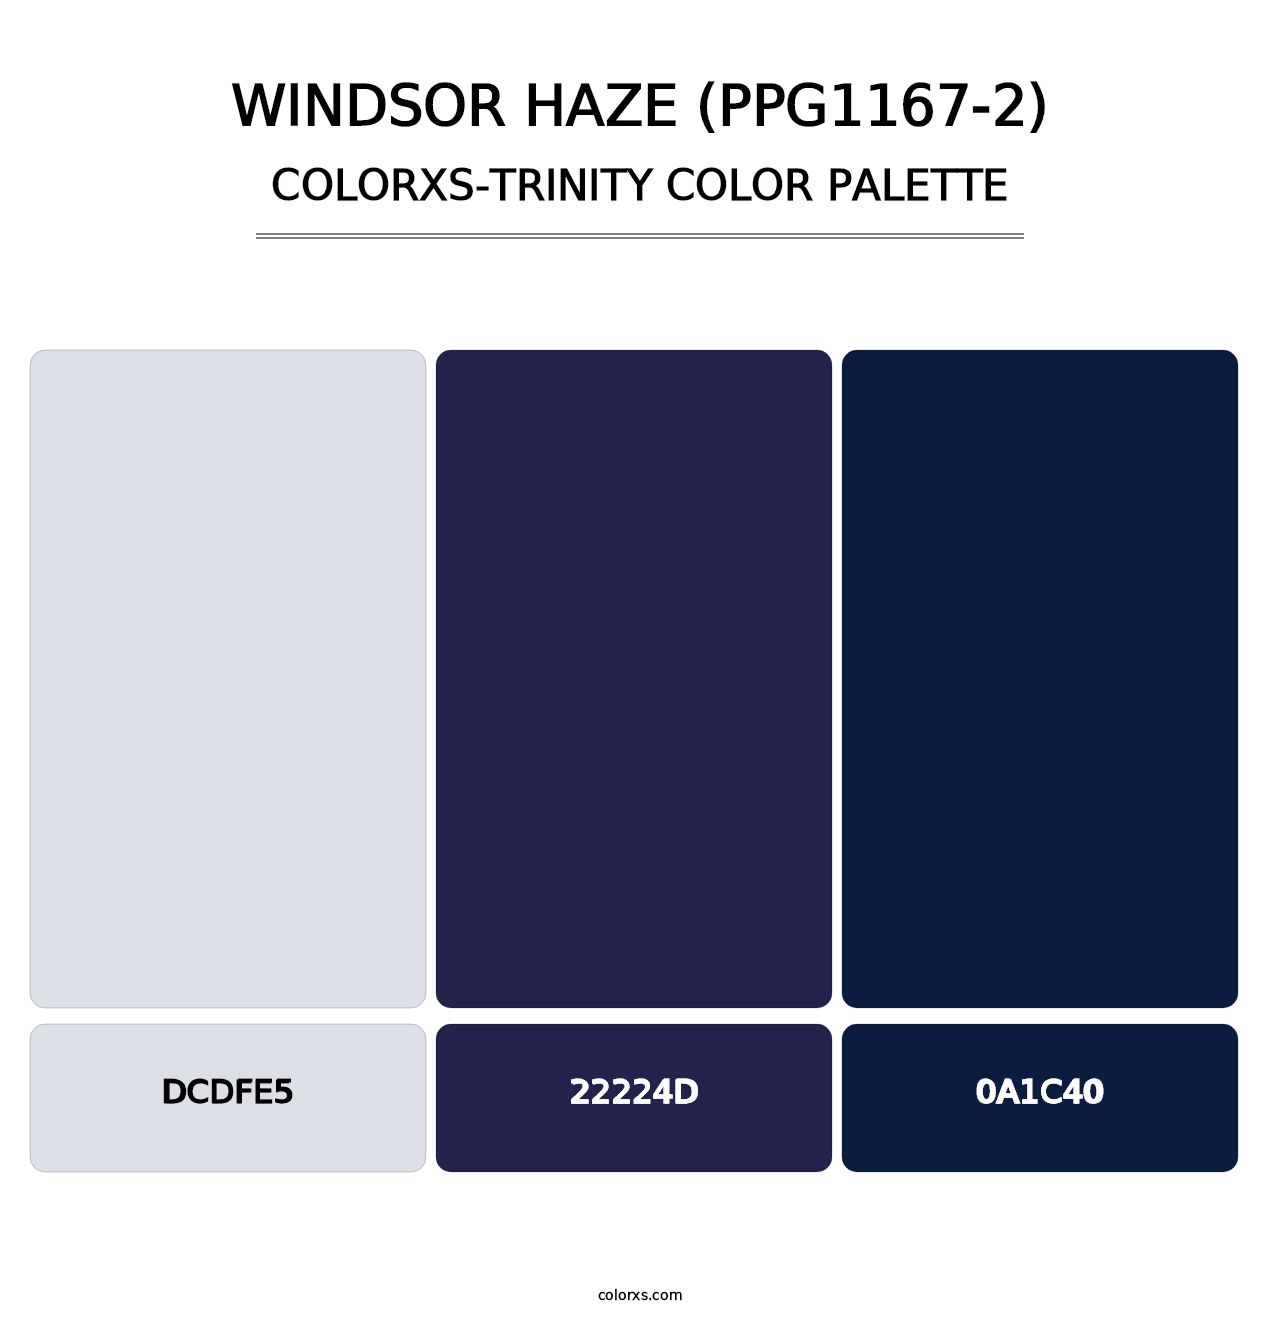 Windsor Haze (PPG1167-2) - Colorxs Trinity Palette